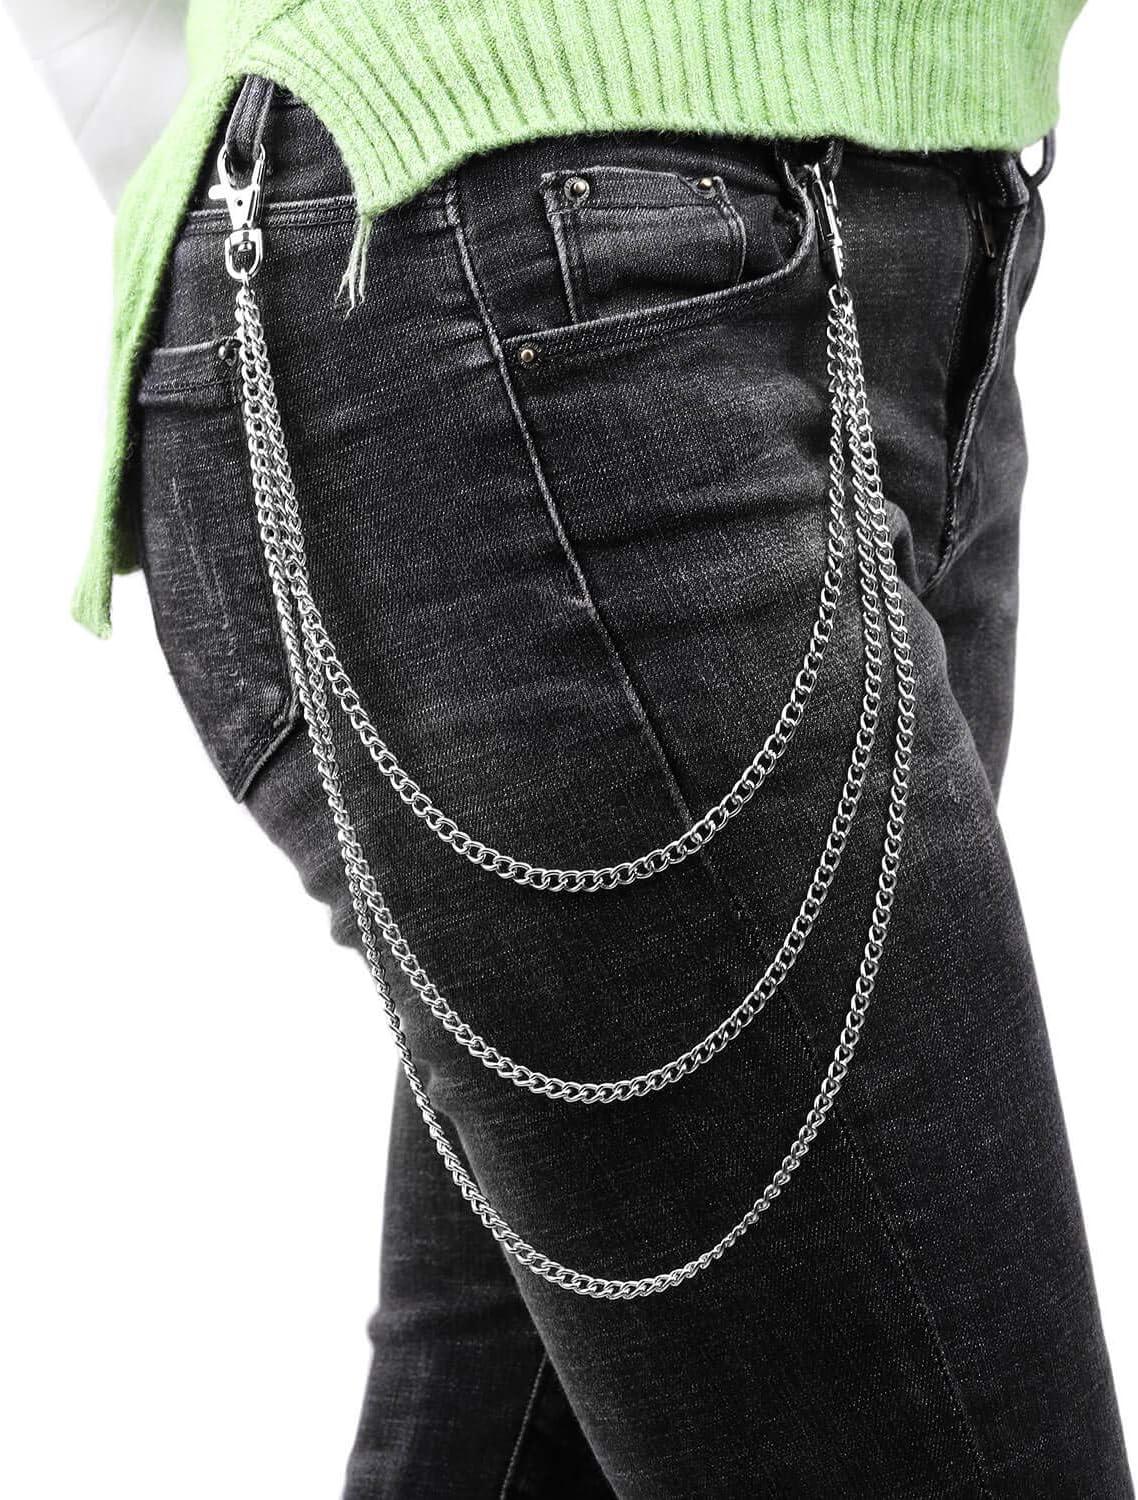 Anezus 3pcs Belt Chain, Pocket Chain, Chains for Wallet, Pants